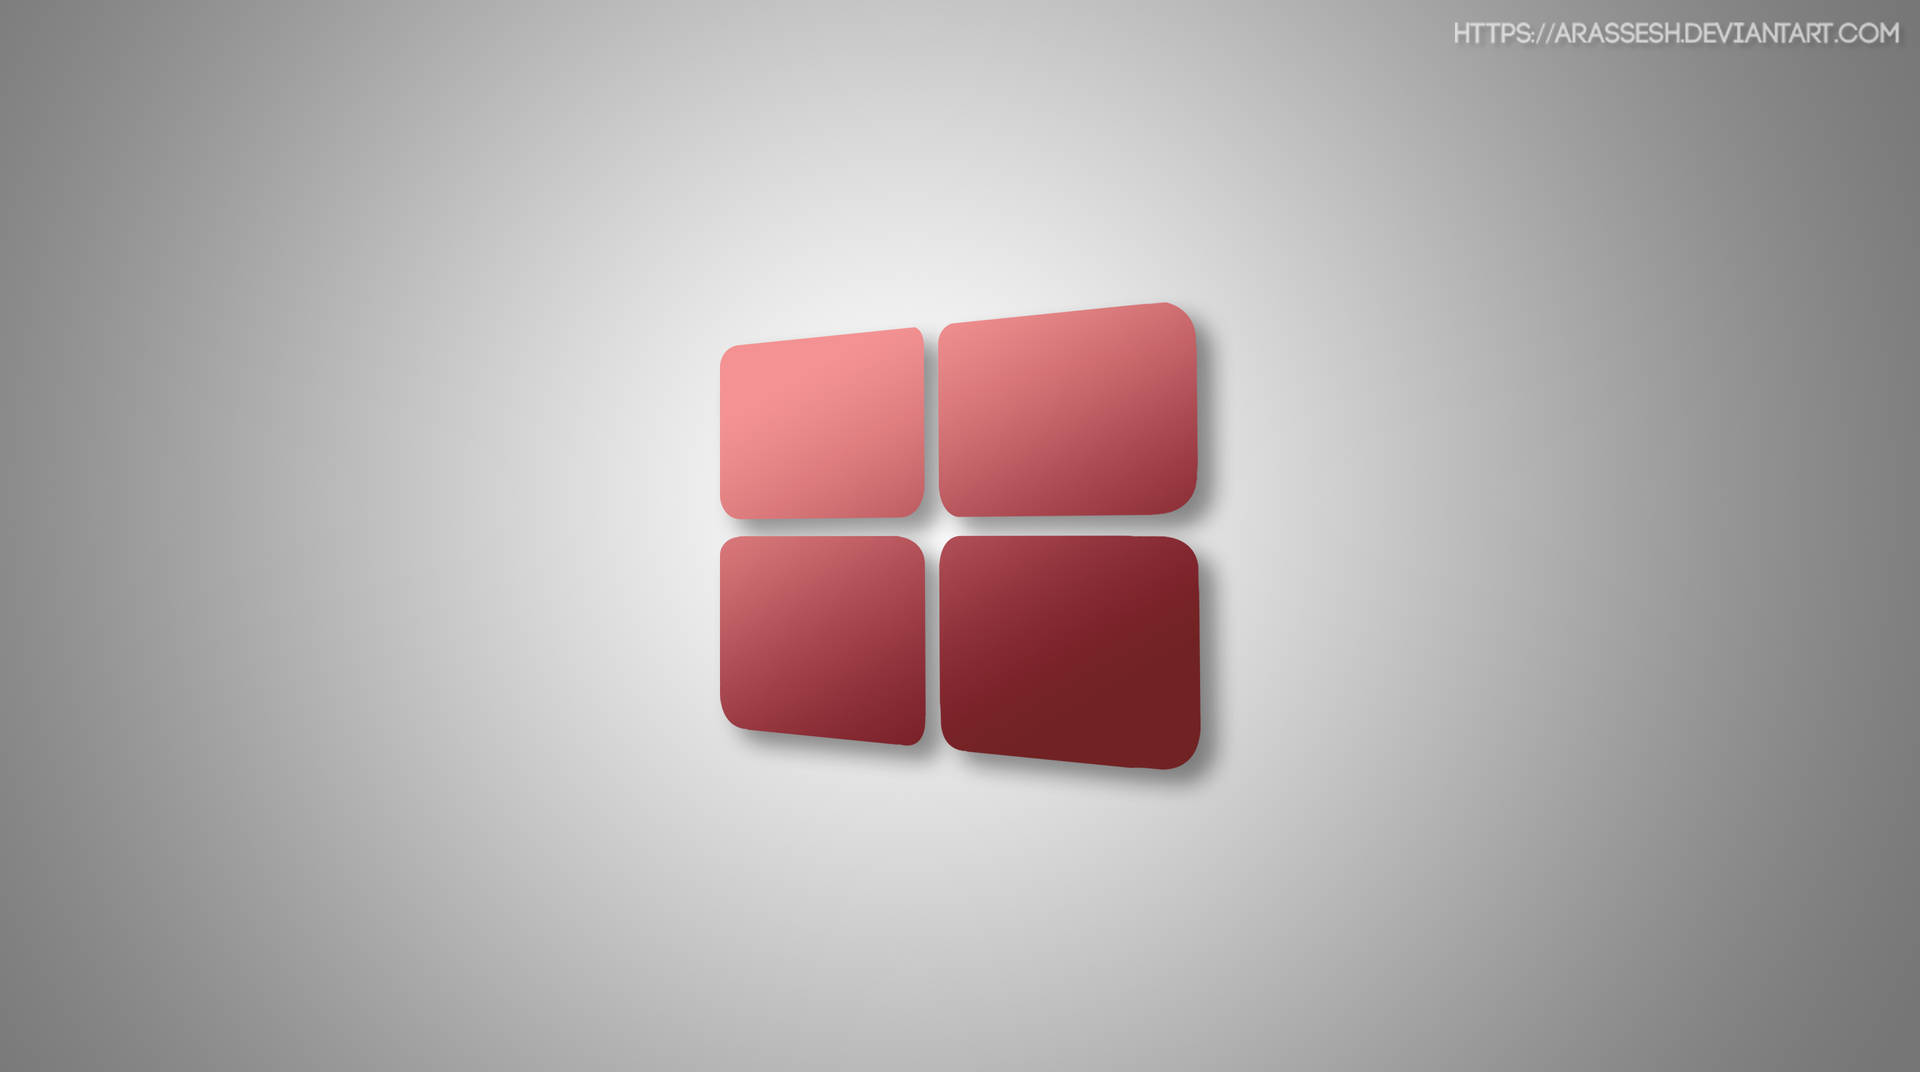 Minimalist Windows 10 Hd Red Logo Background